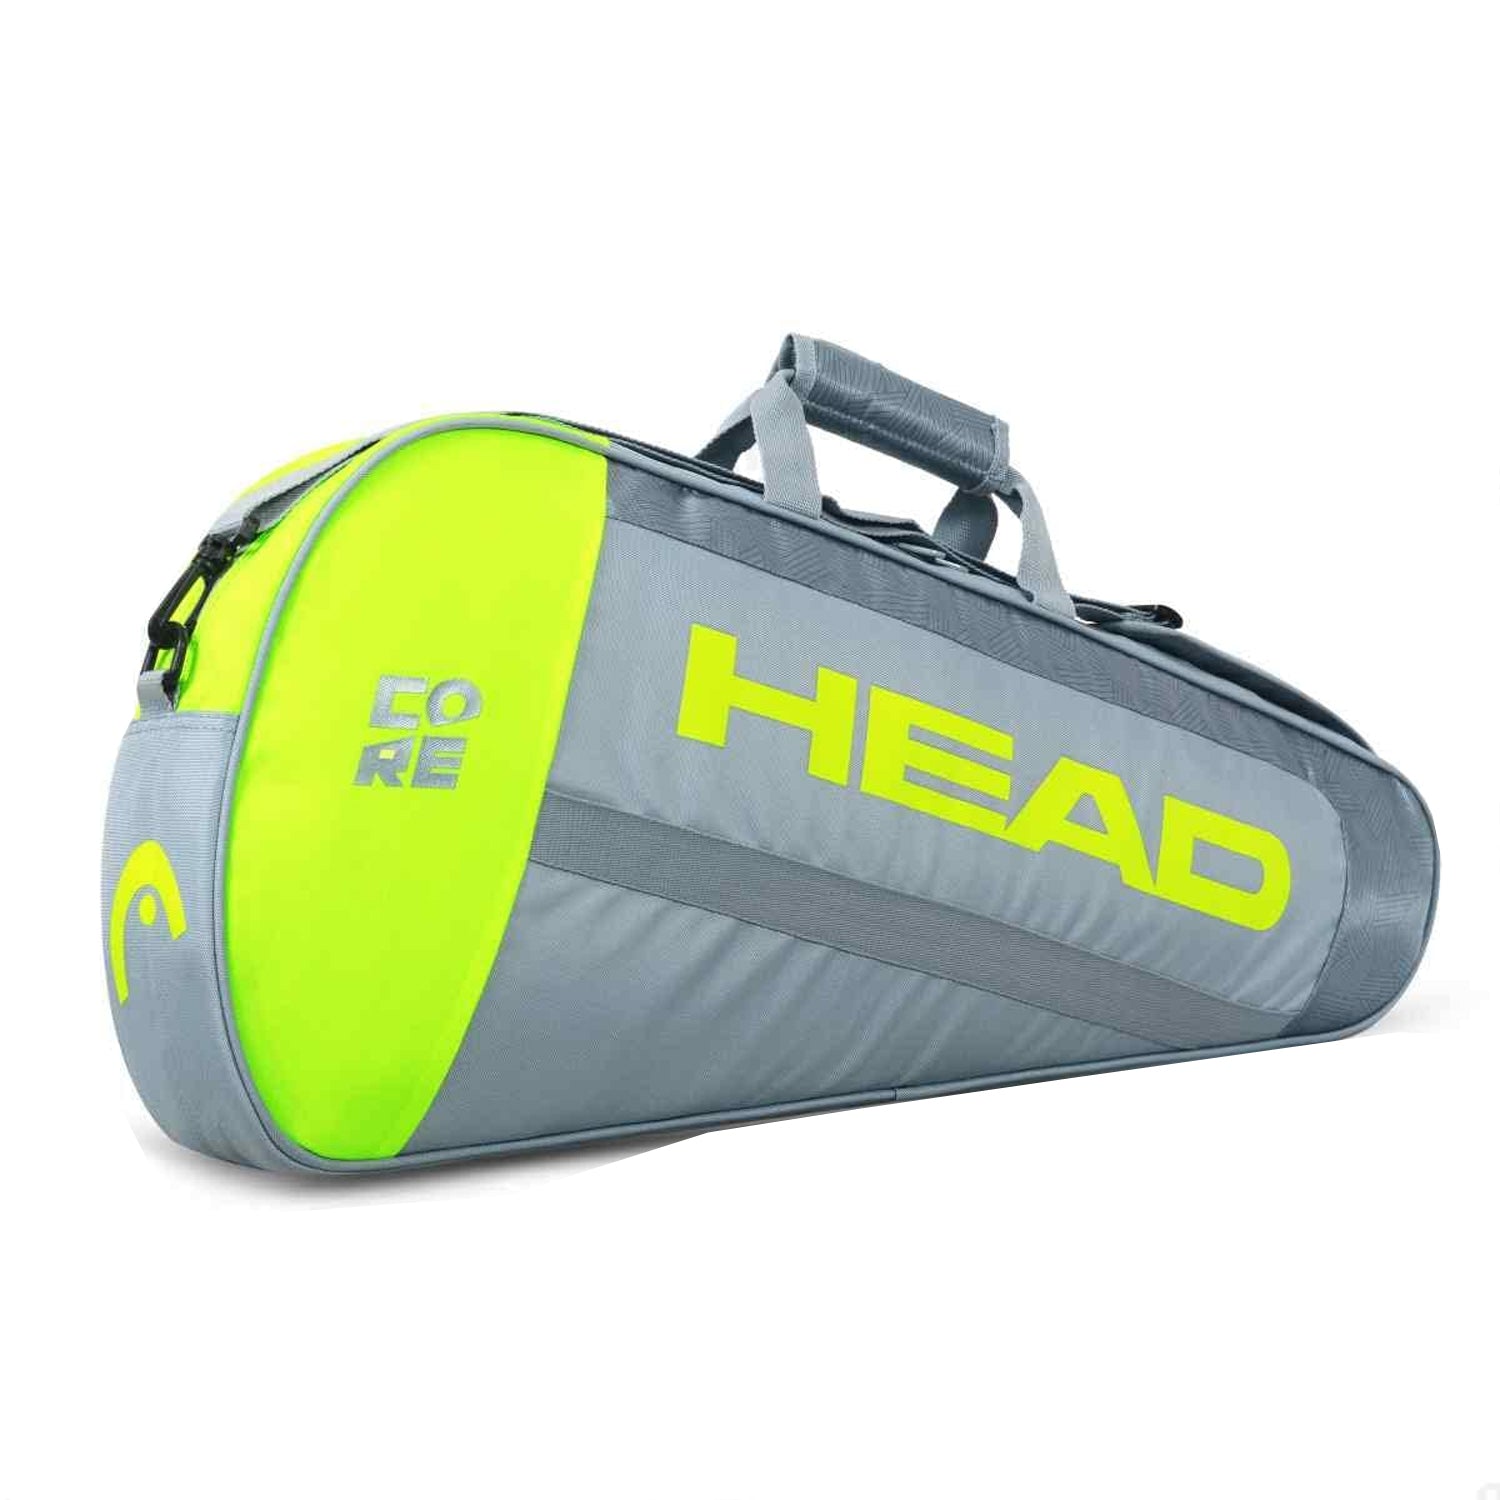 Head Core 6R Combi Tennis Kit Bag, Grey/Neon Yellow - Best Price online Prokicksports.com